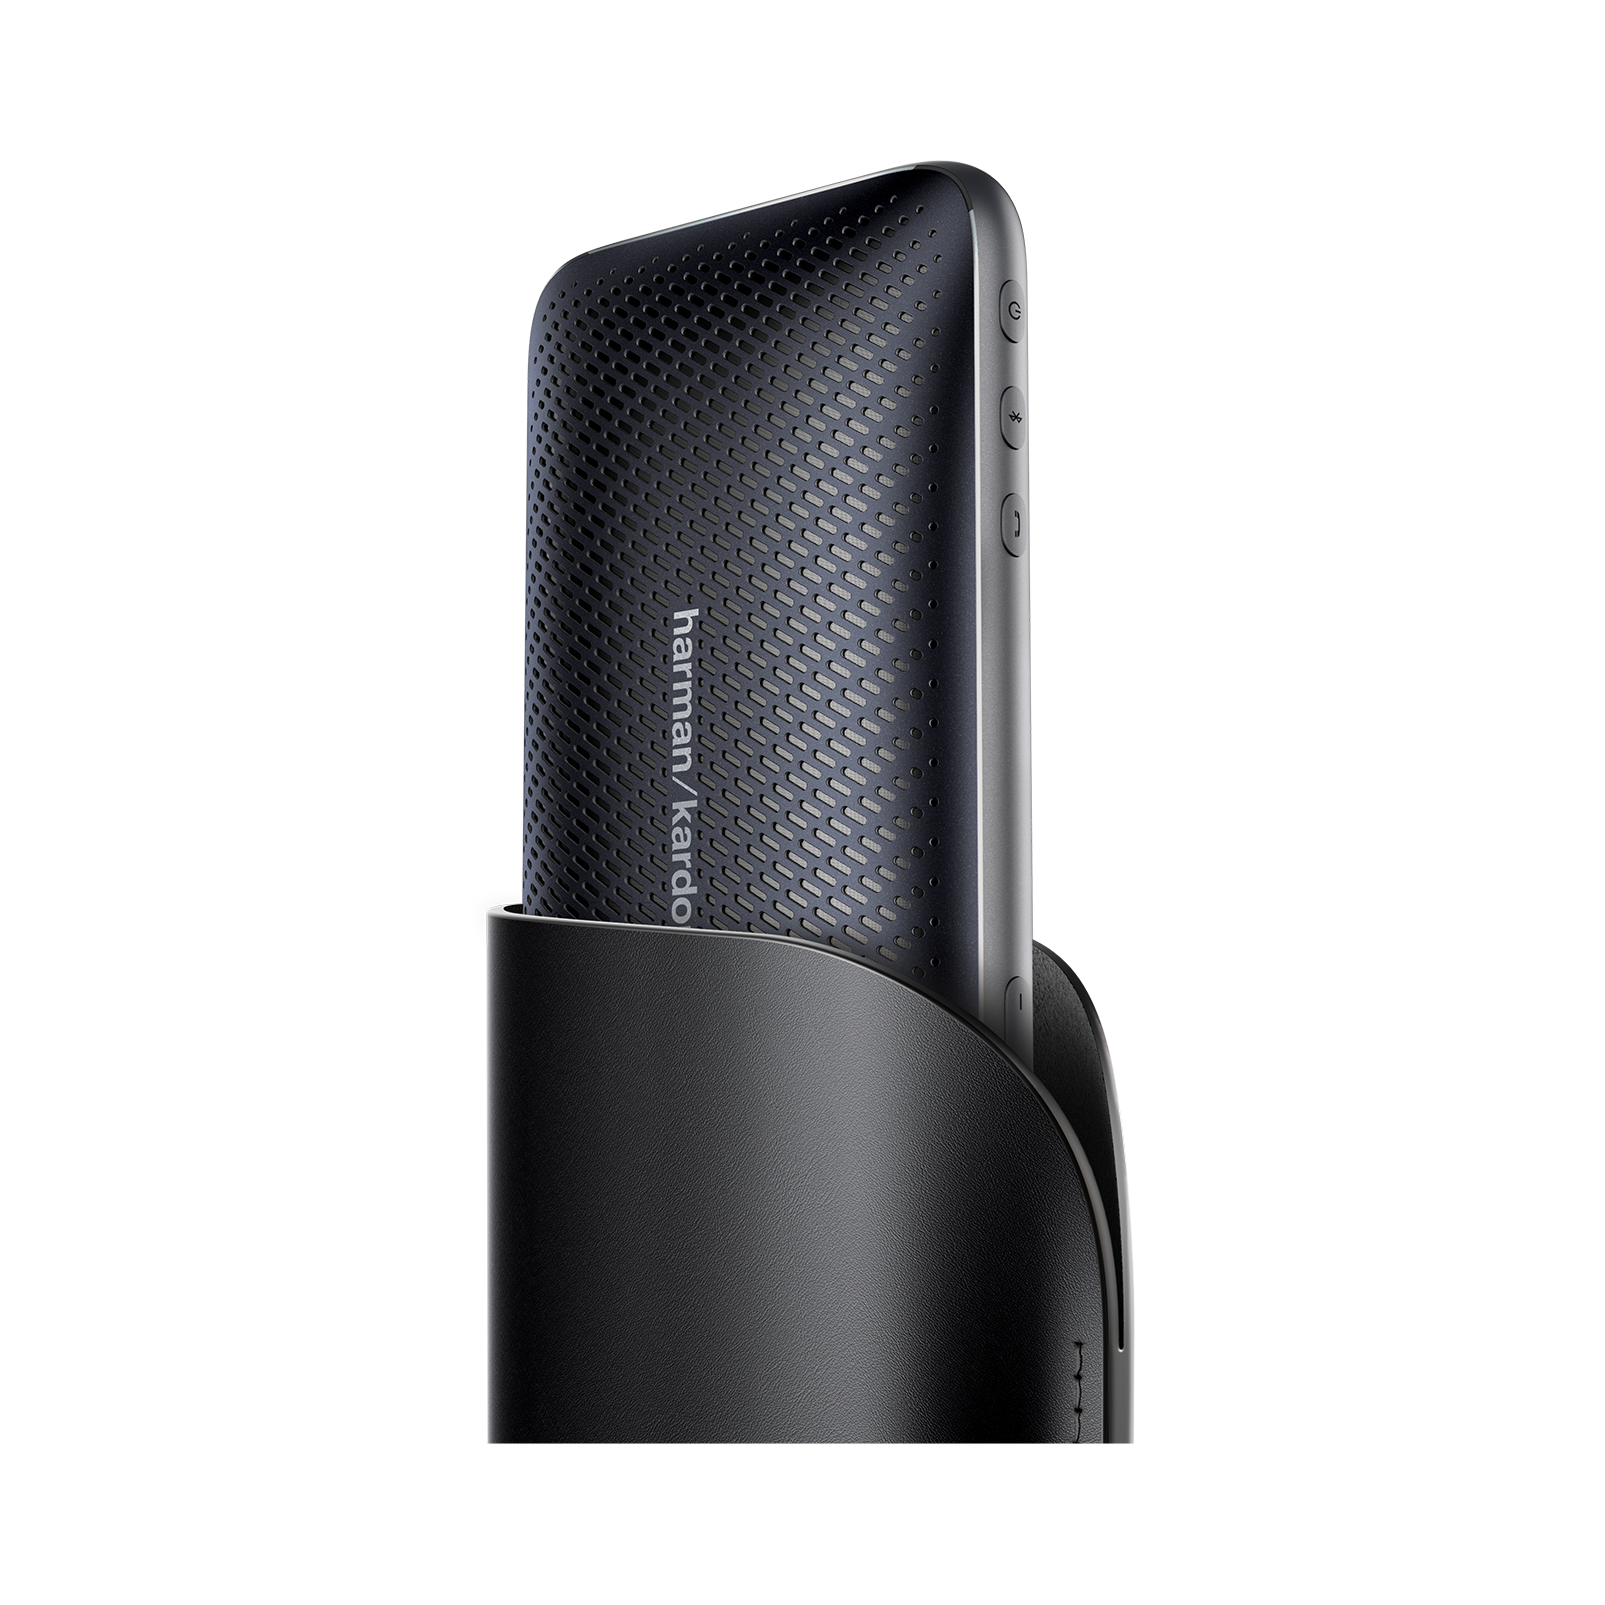 Harman Kardon Esquire Mini 2 - Black - Ultra-slim and portable premium Bluetooth Speaker - Detailshot 1